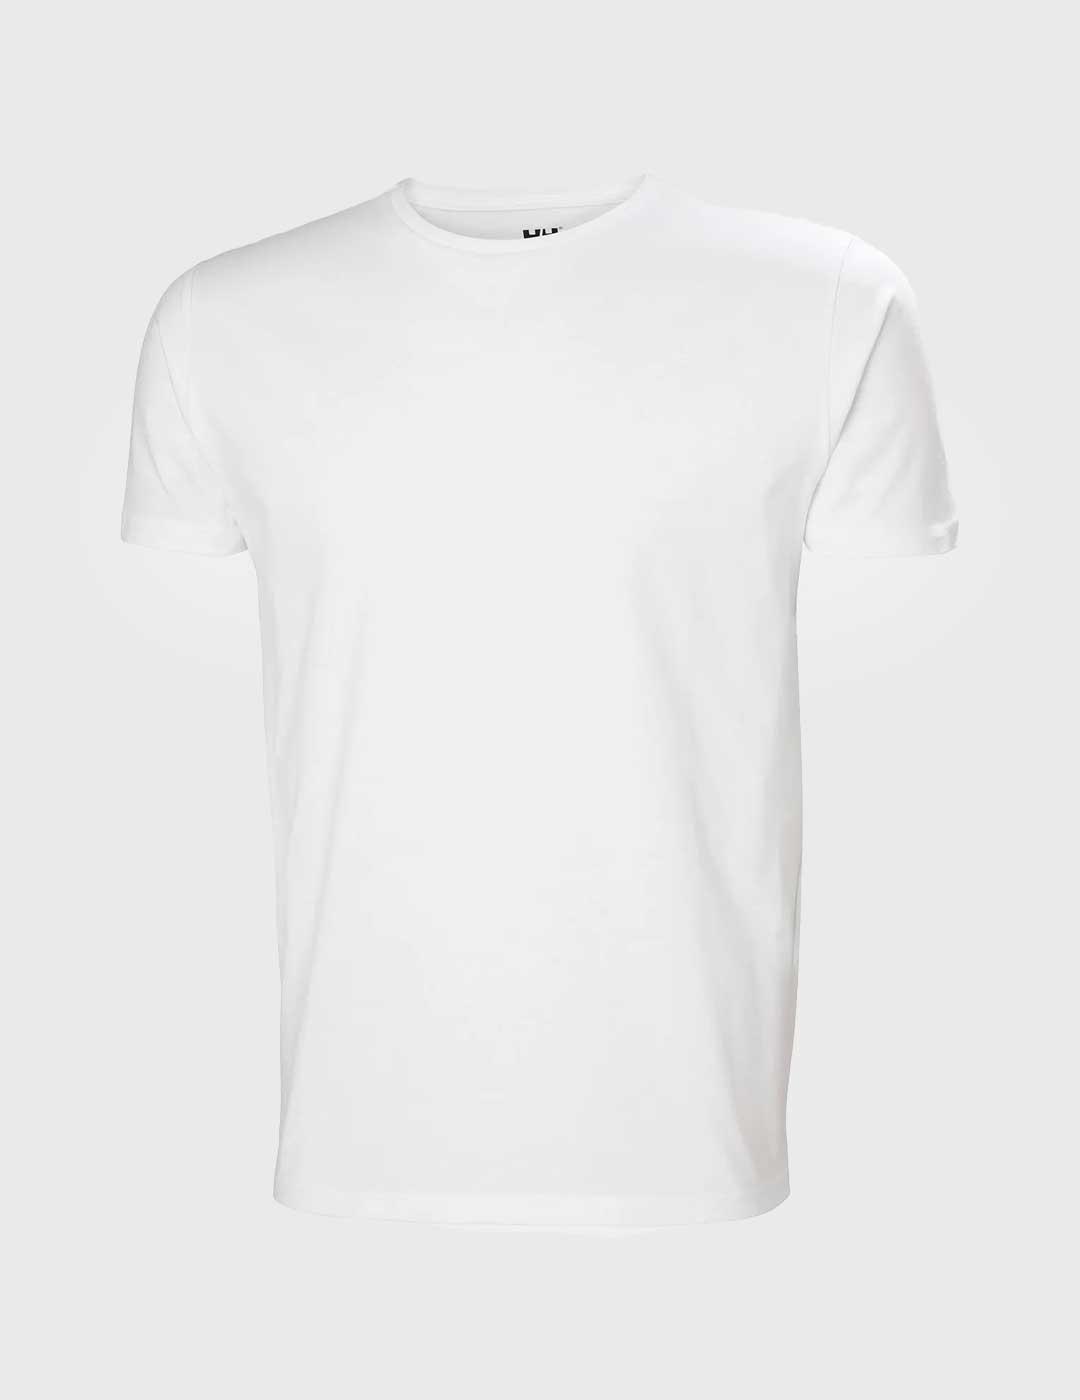 Helly Hansen Shoreline T Shirt Camiseta blanca para hombre